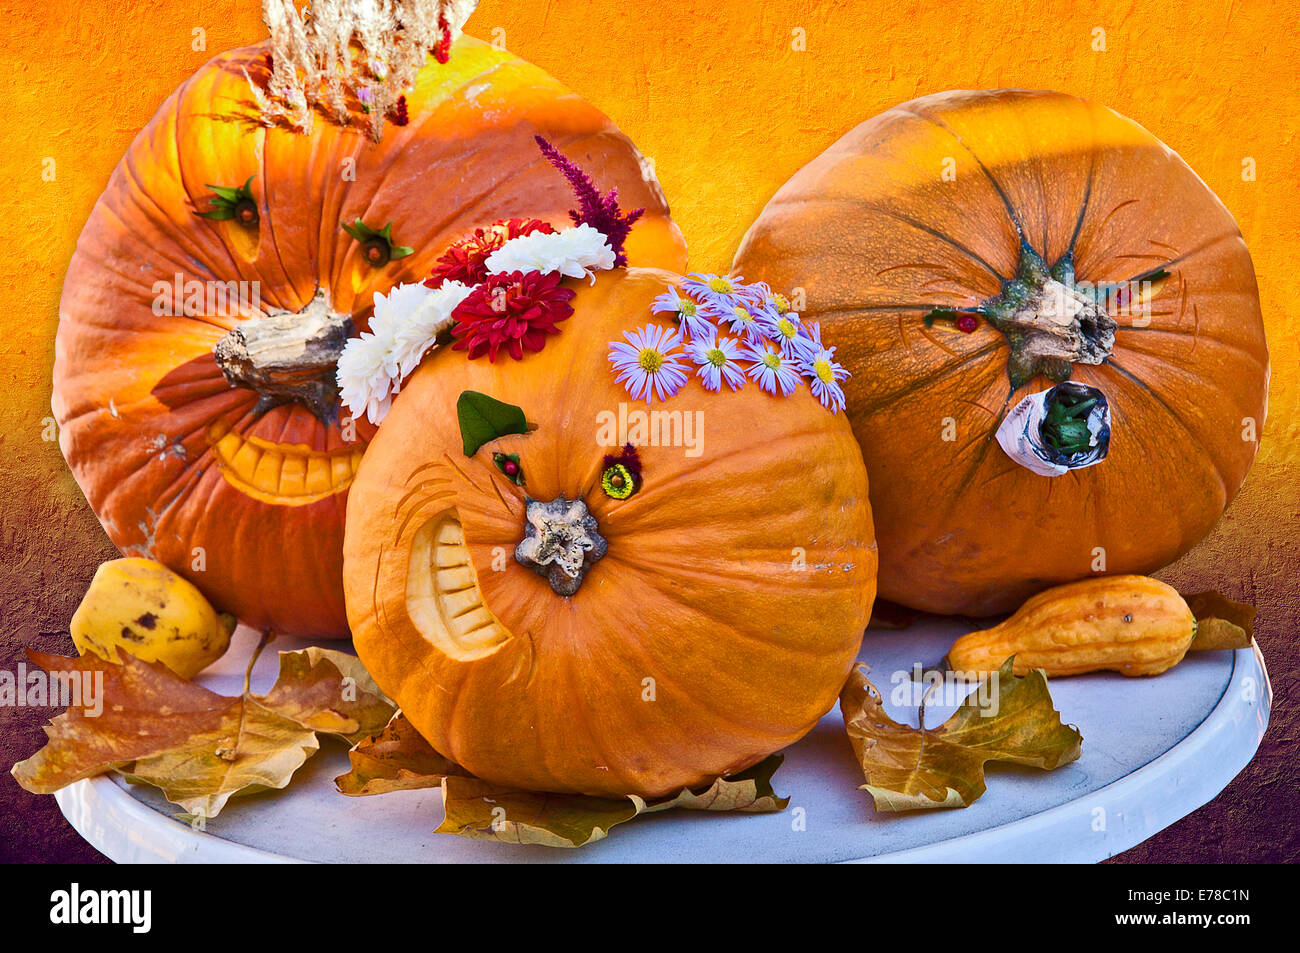 Funny and creative Halloween pumpkins Stock Photo